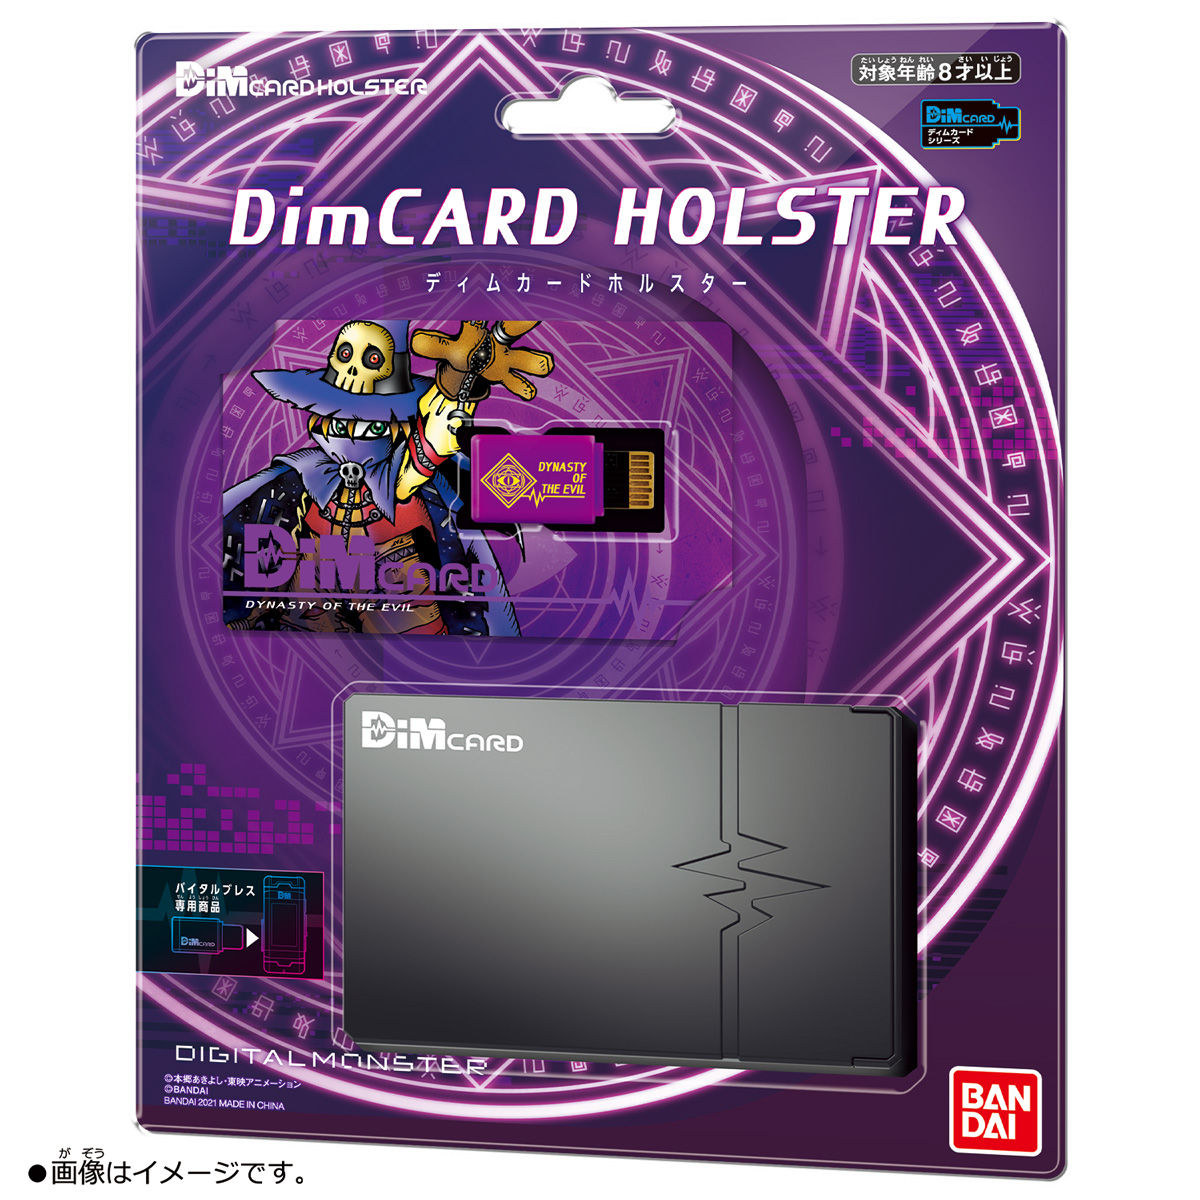 Digimon Dim Card Holster & Dynasty of the Evil Dim Card